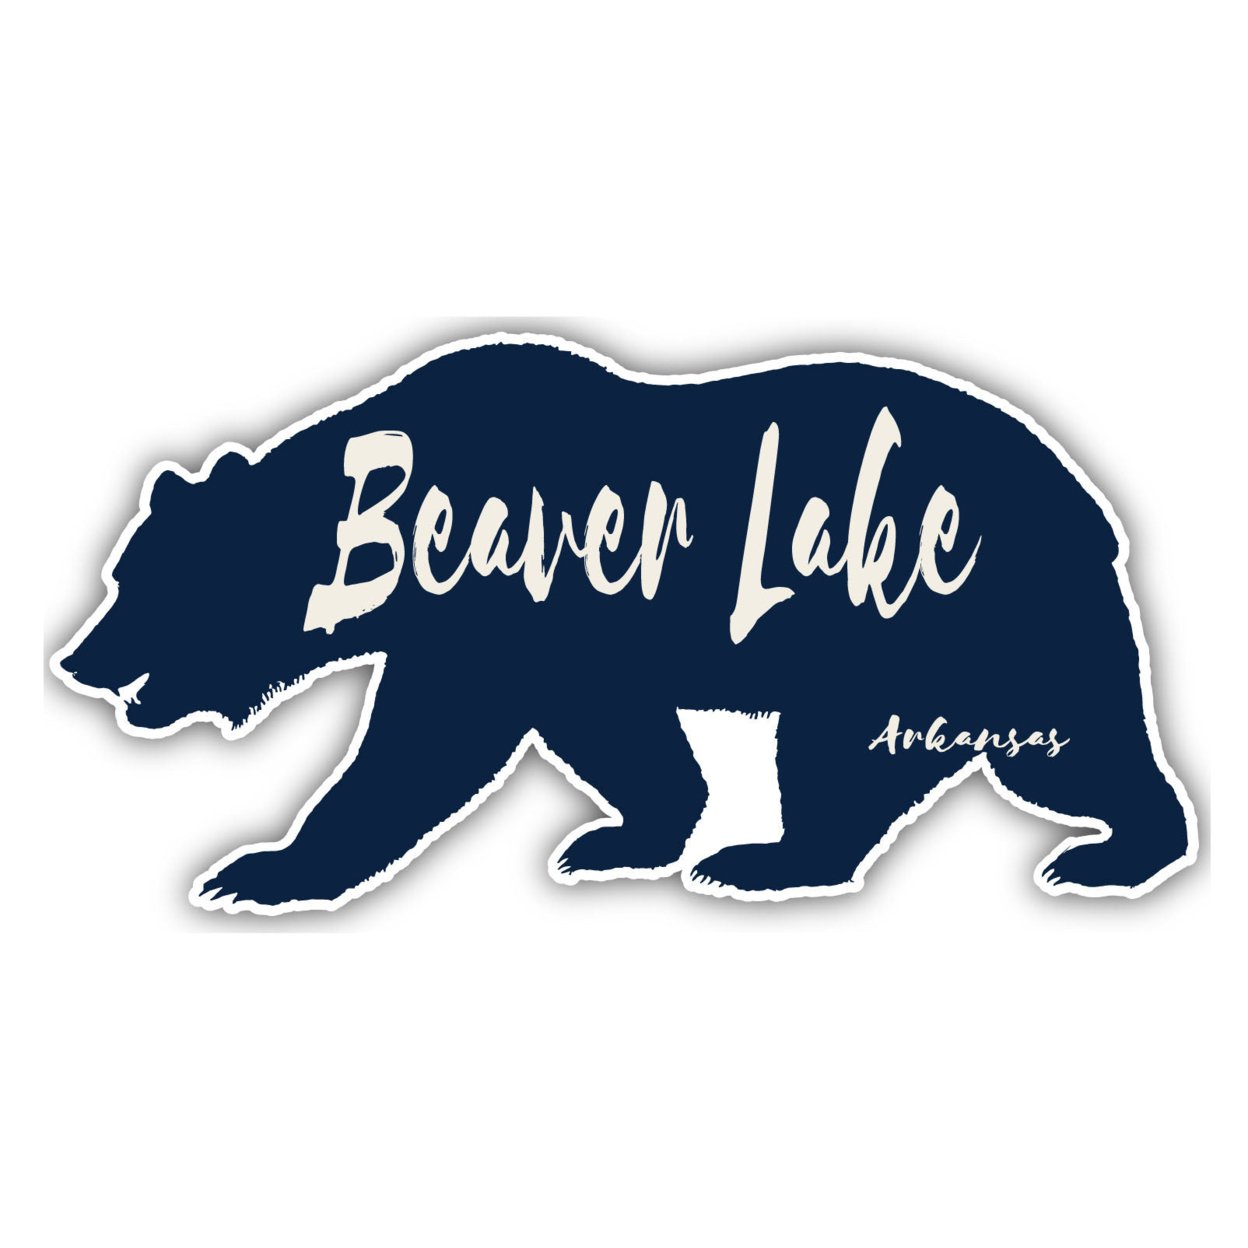 Beaver Lake Arkansas Souvenir Decorative Stickers (Choose Theme And Size) - 4-Pack, 6-Inch, Bear